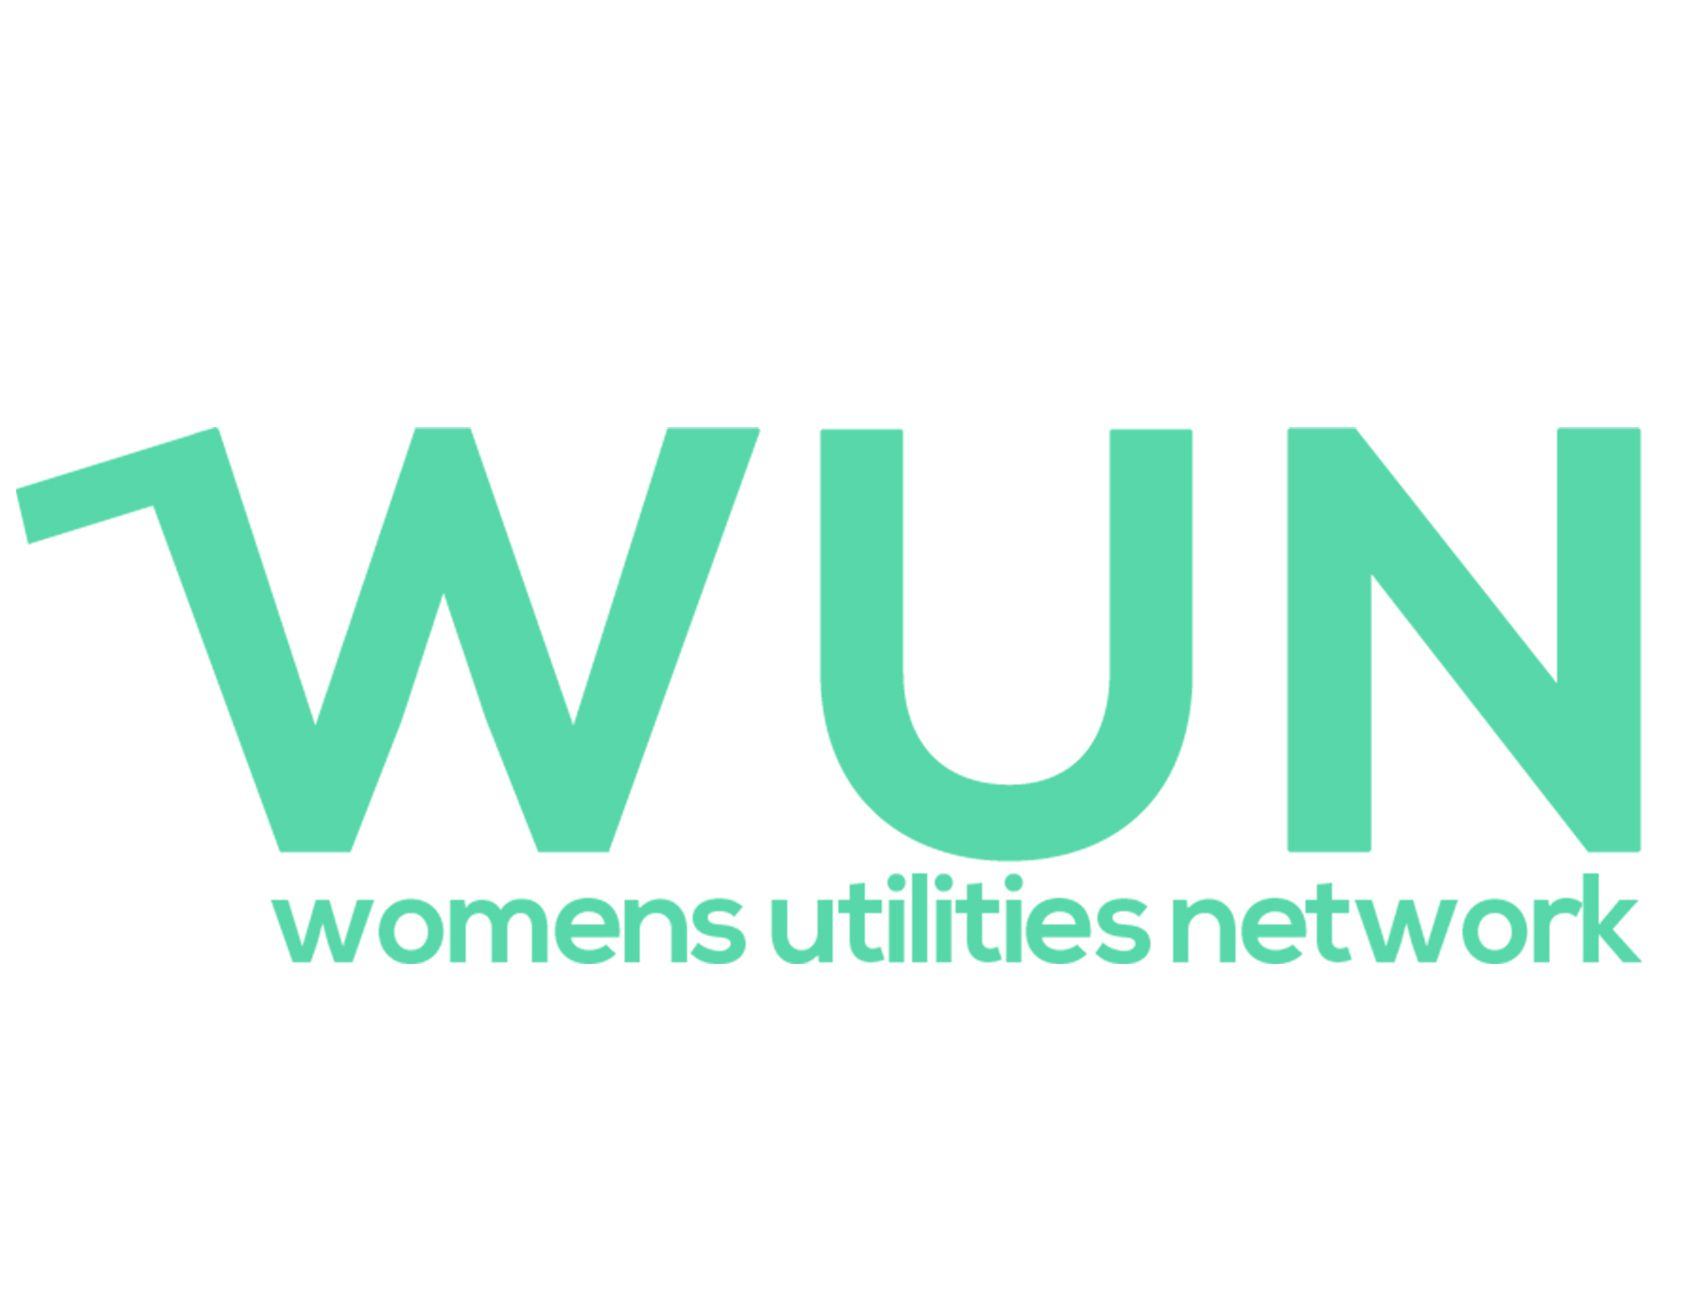 Utiligroup brings its energy to Women’s Utilities Network